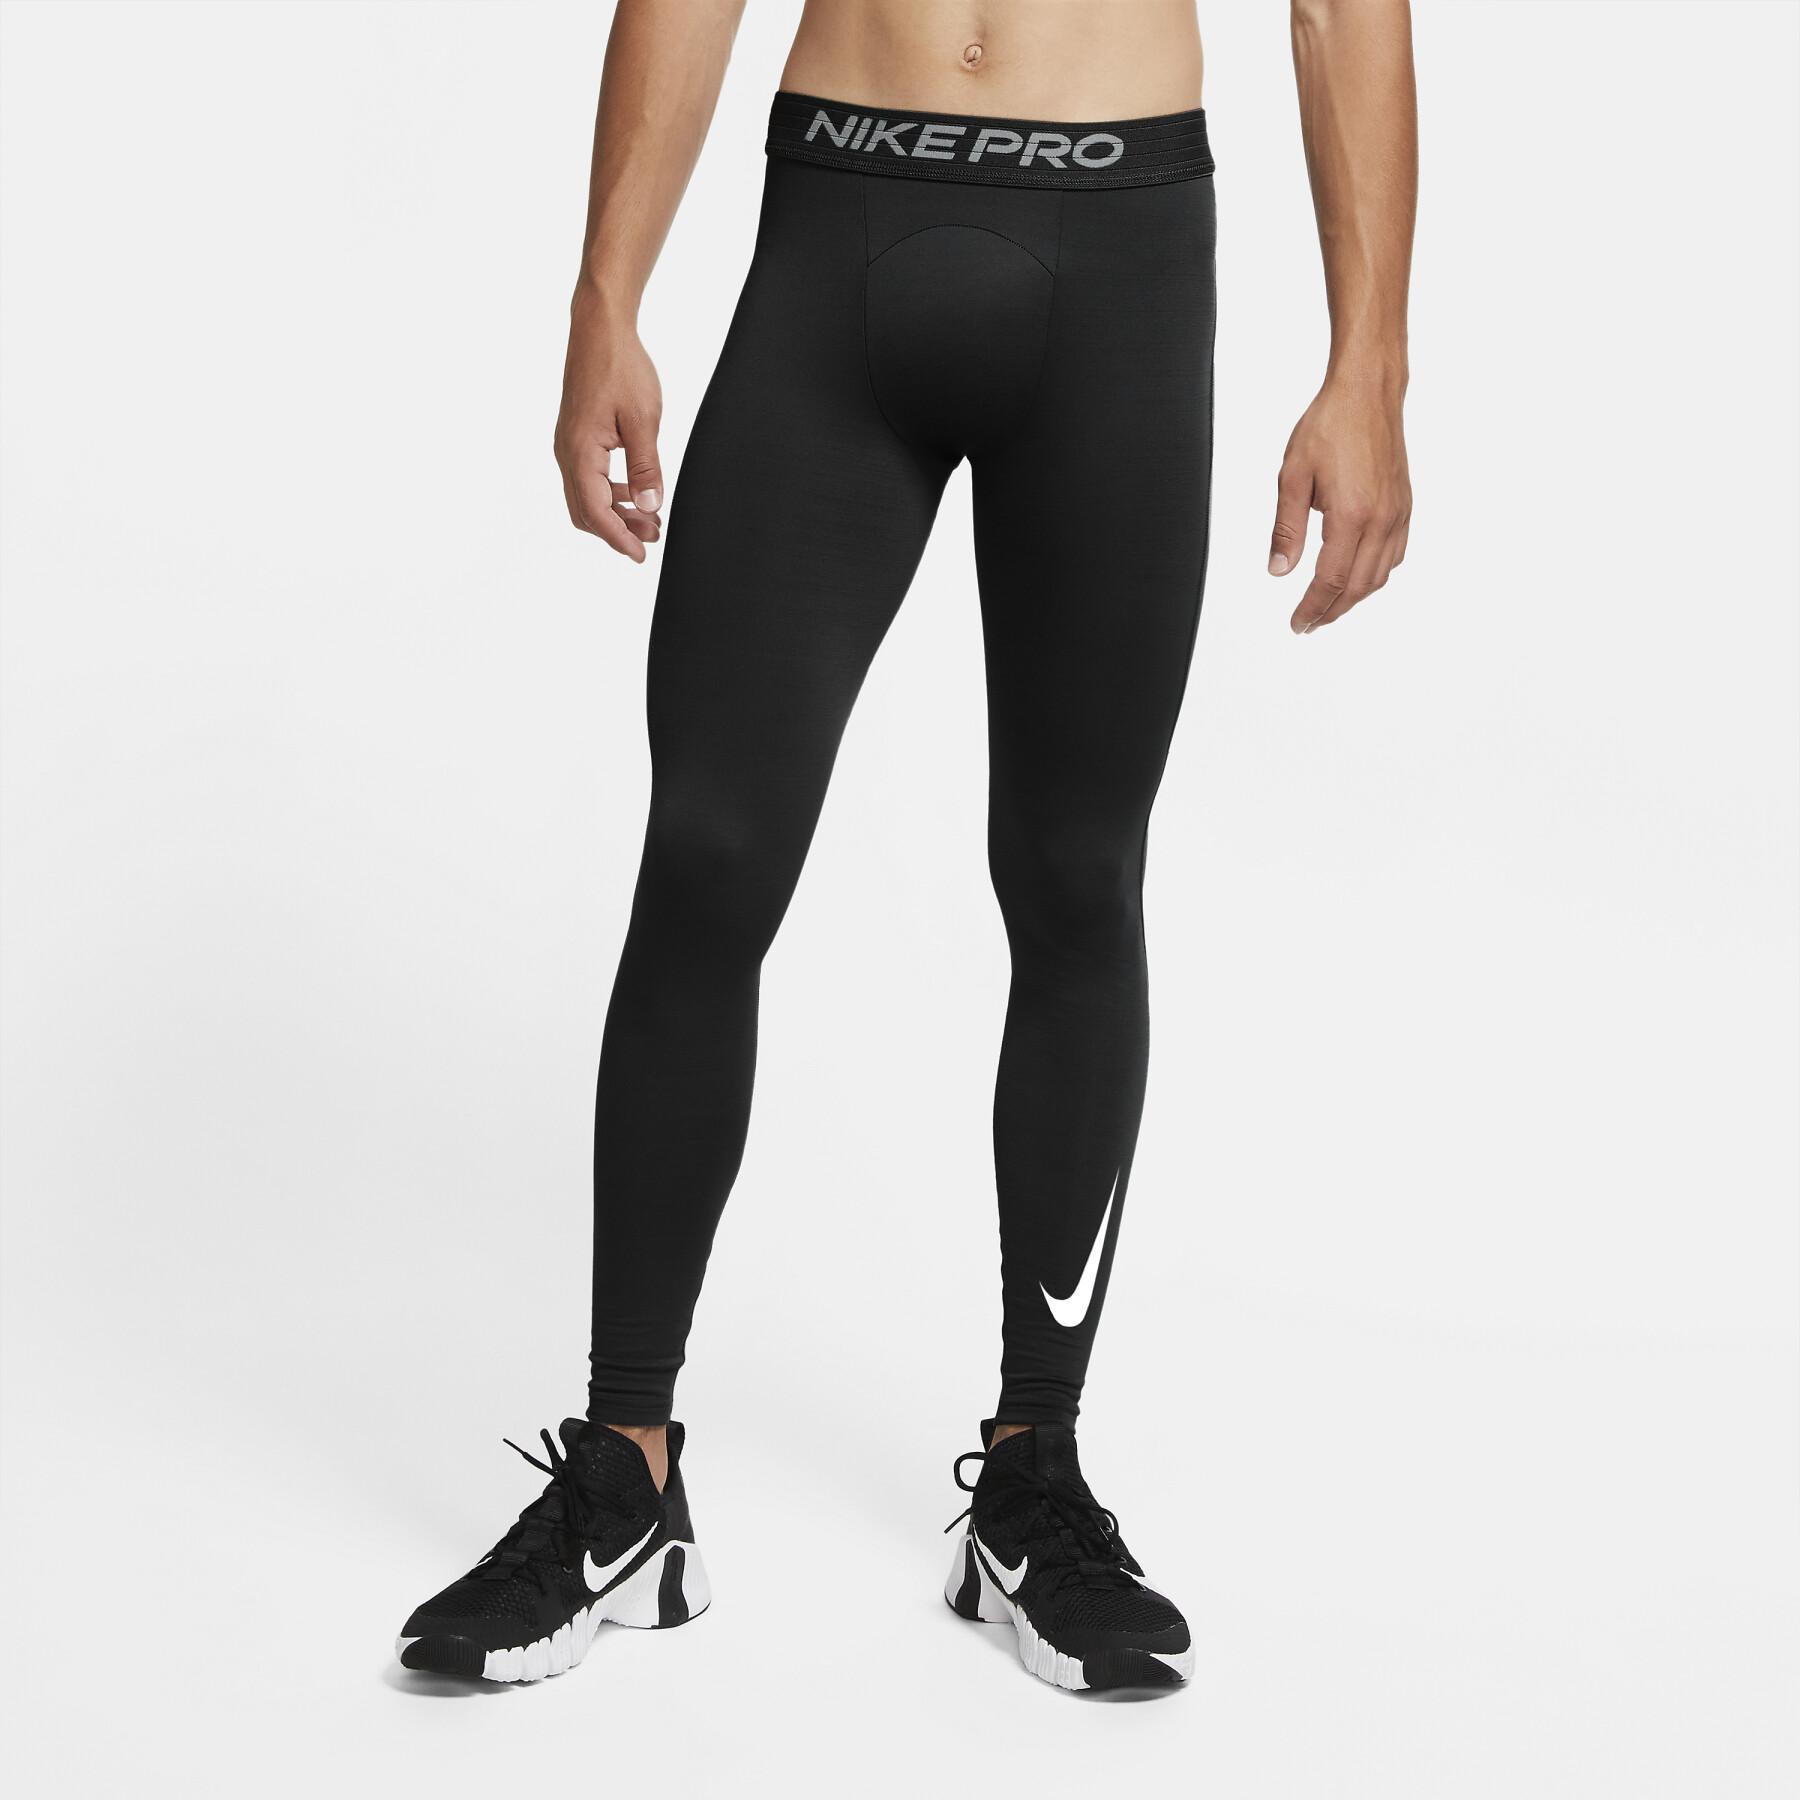 Tights Nike Pro Warm - Leggings - Men's Clothing - Fitness